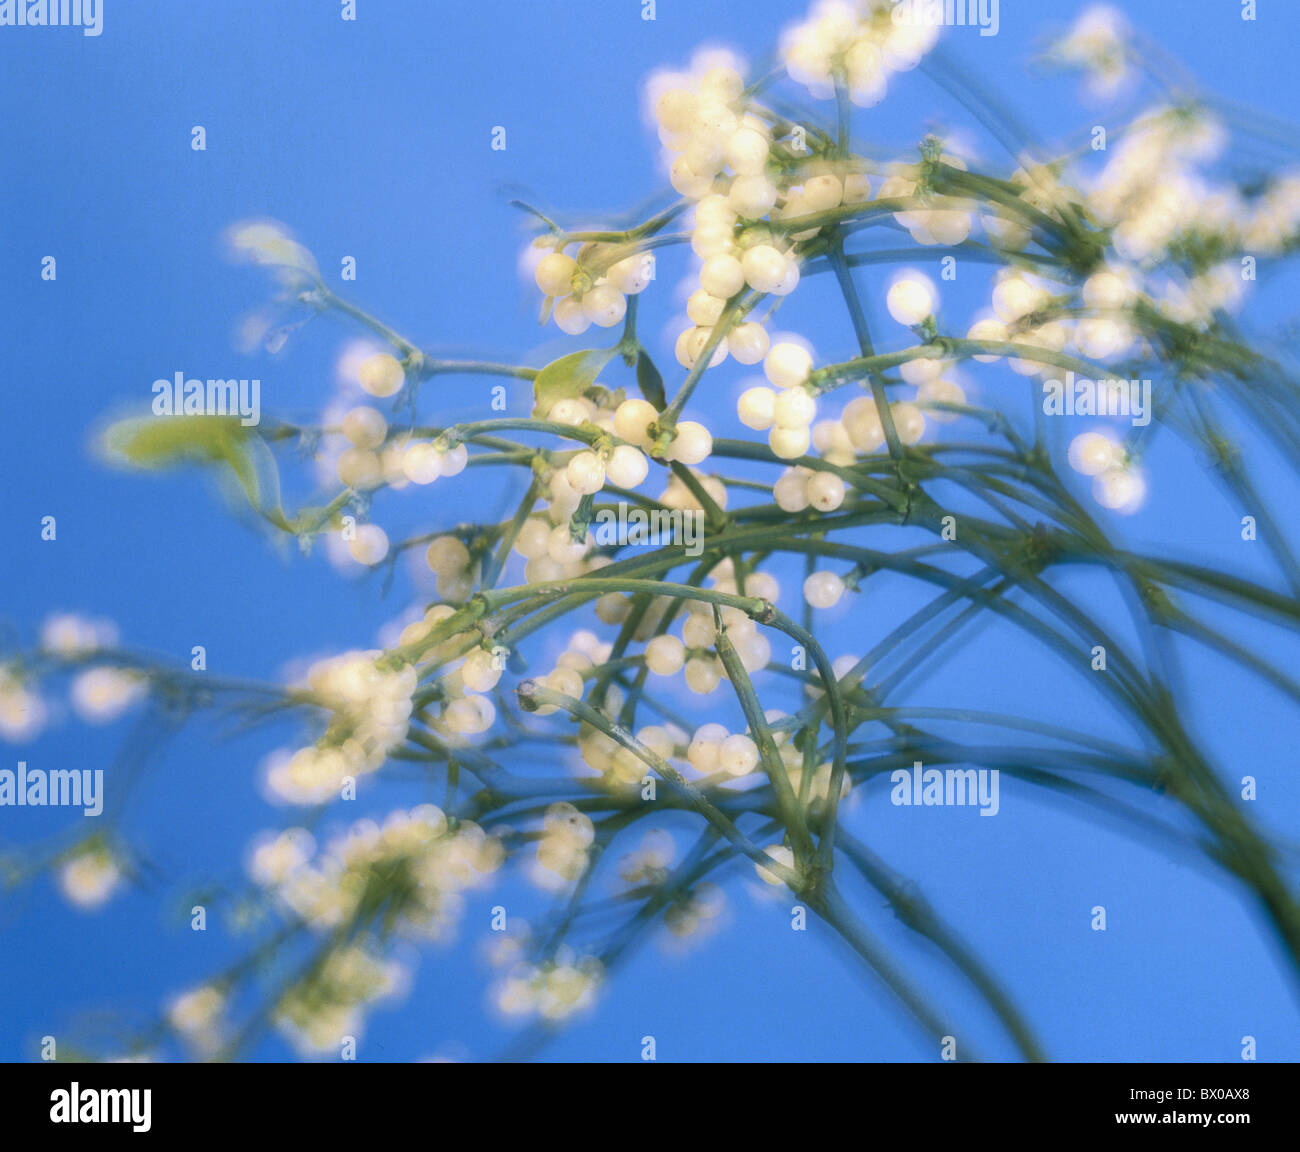 remedial plant impression mistletoe blurr blurs branch Stock Photo